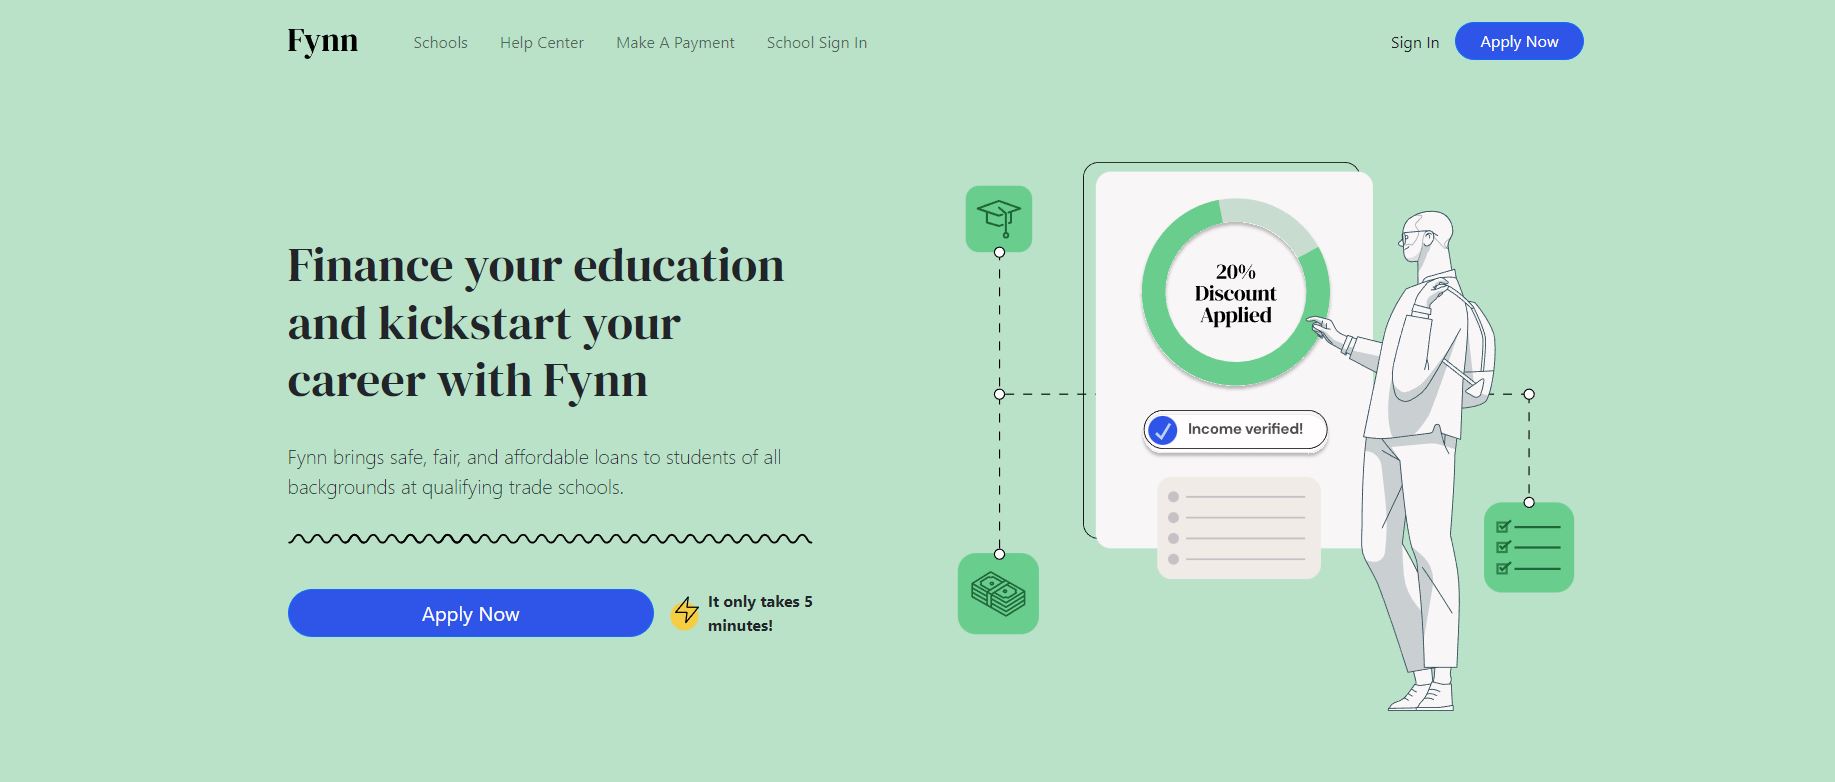 Fynn has raised $36 million in seed funding from notable investors